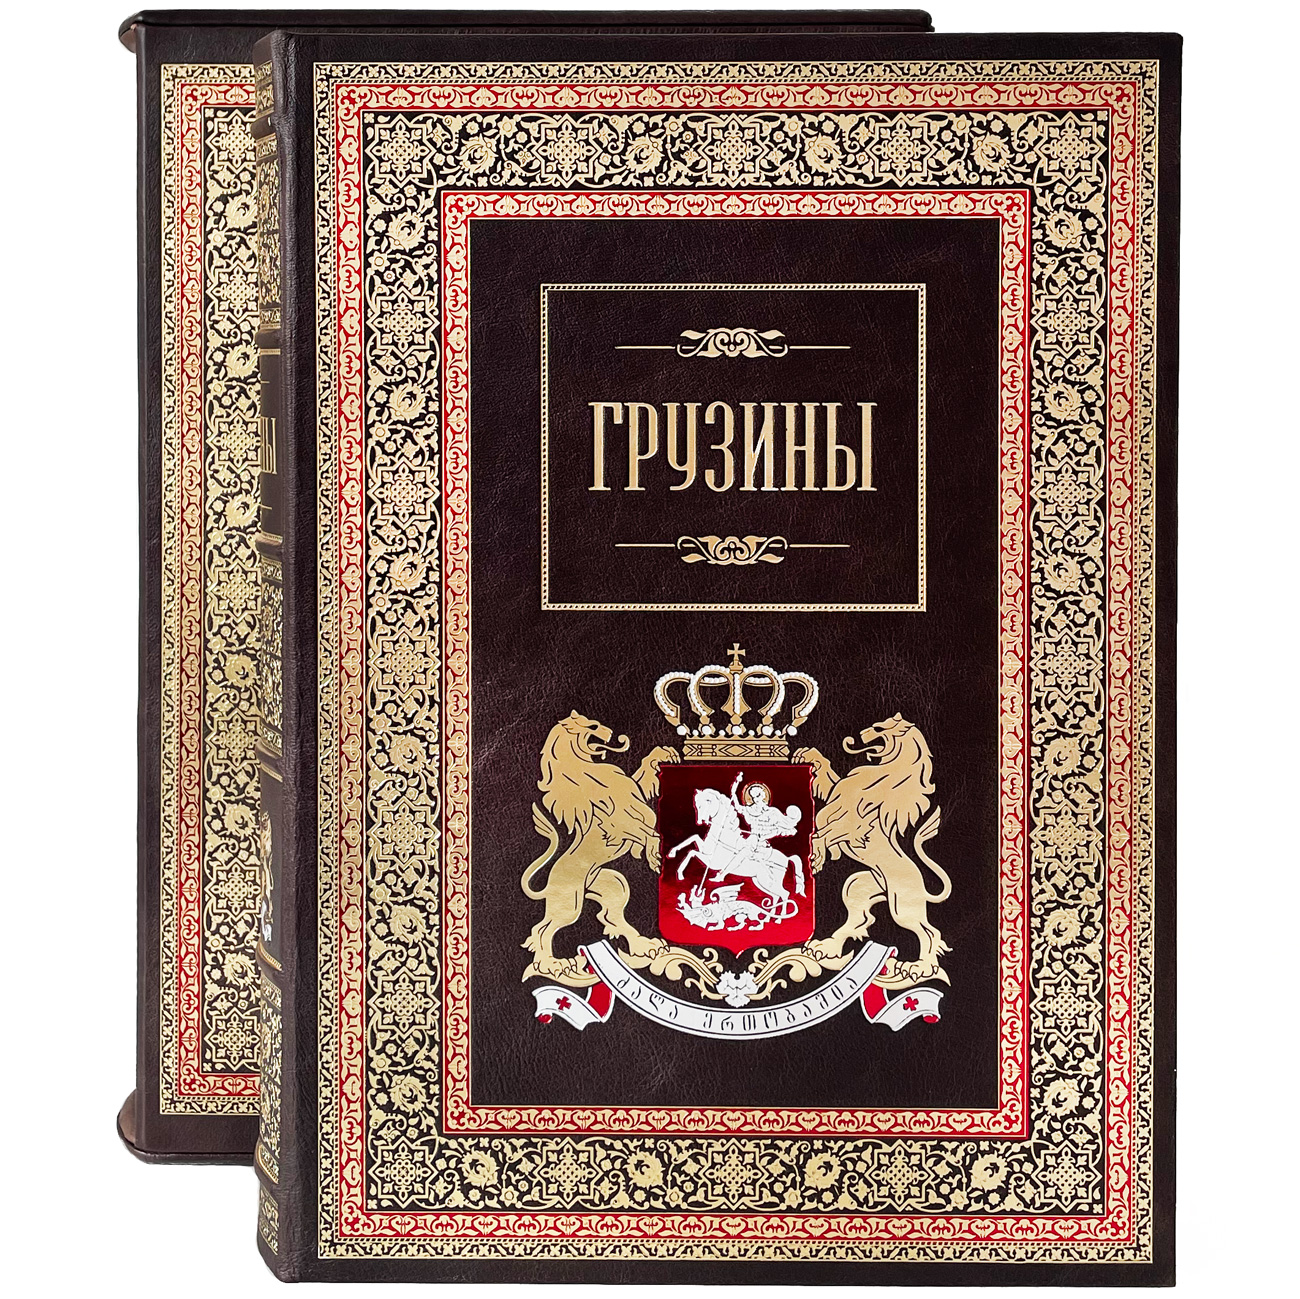 Подарочная книга "Грузины" - артикул: 207251 | Мосподарок 